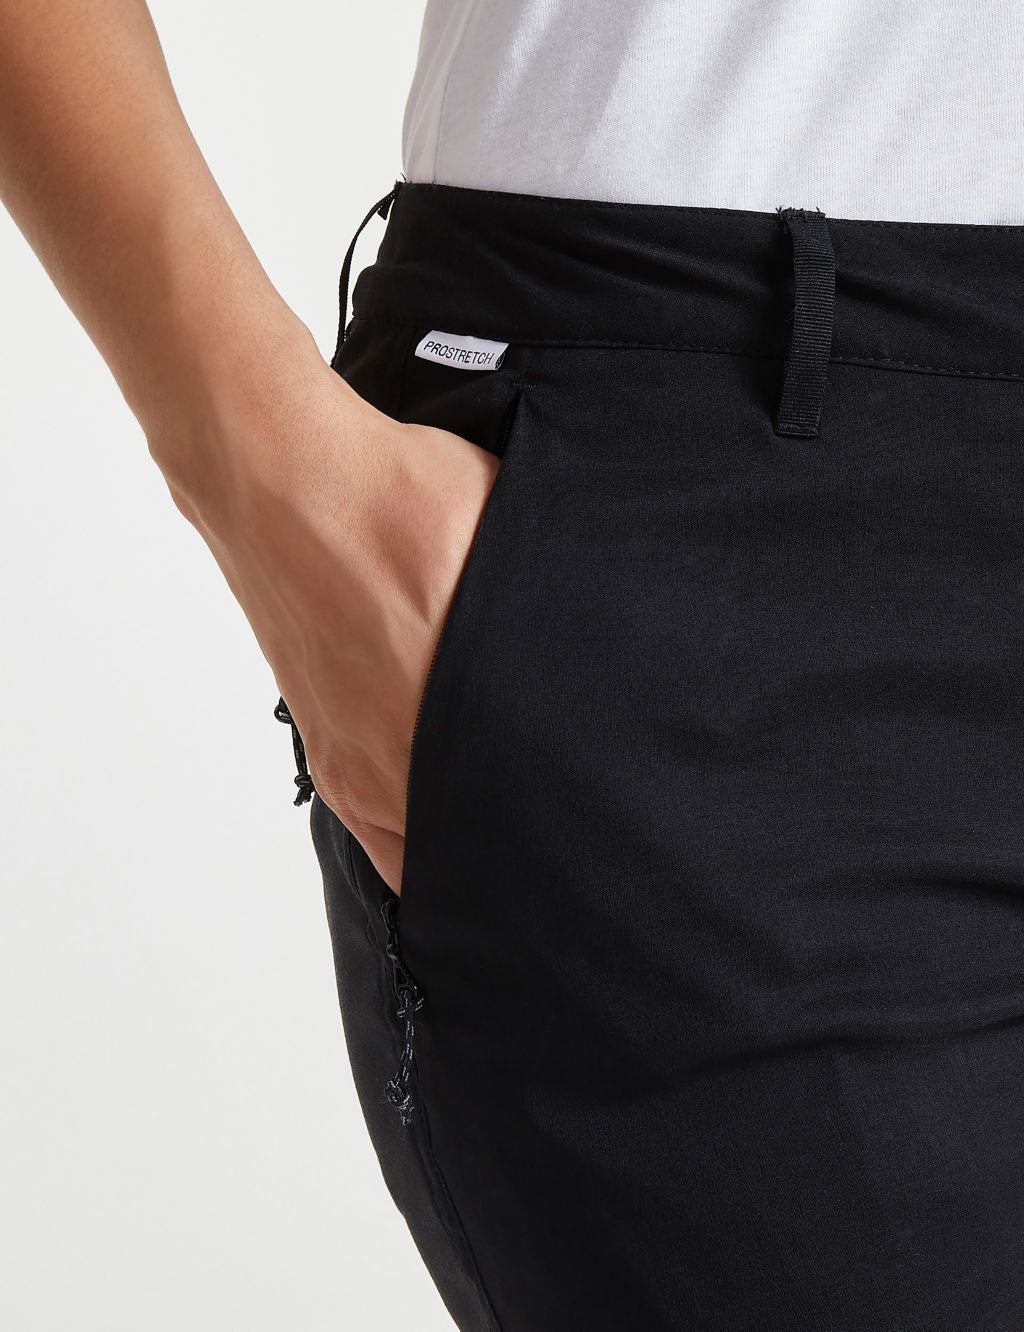 Kiwi Pro Lined Trousers image 5